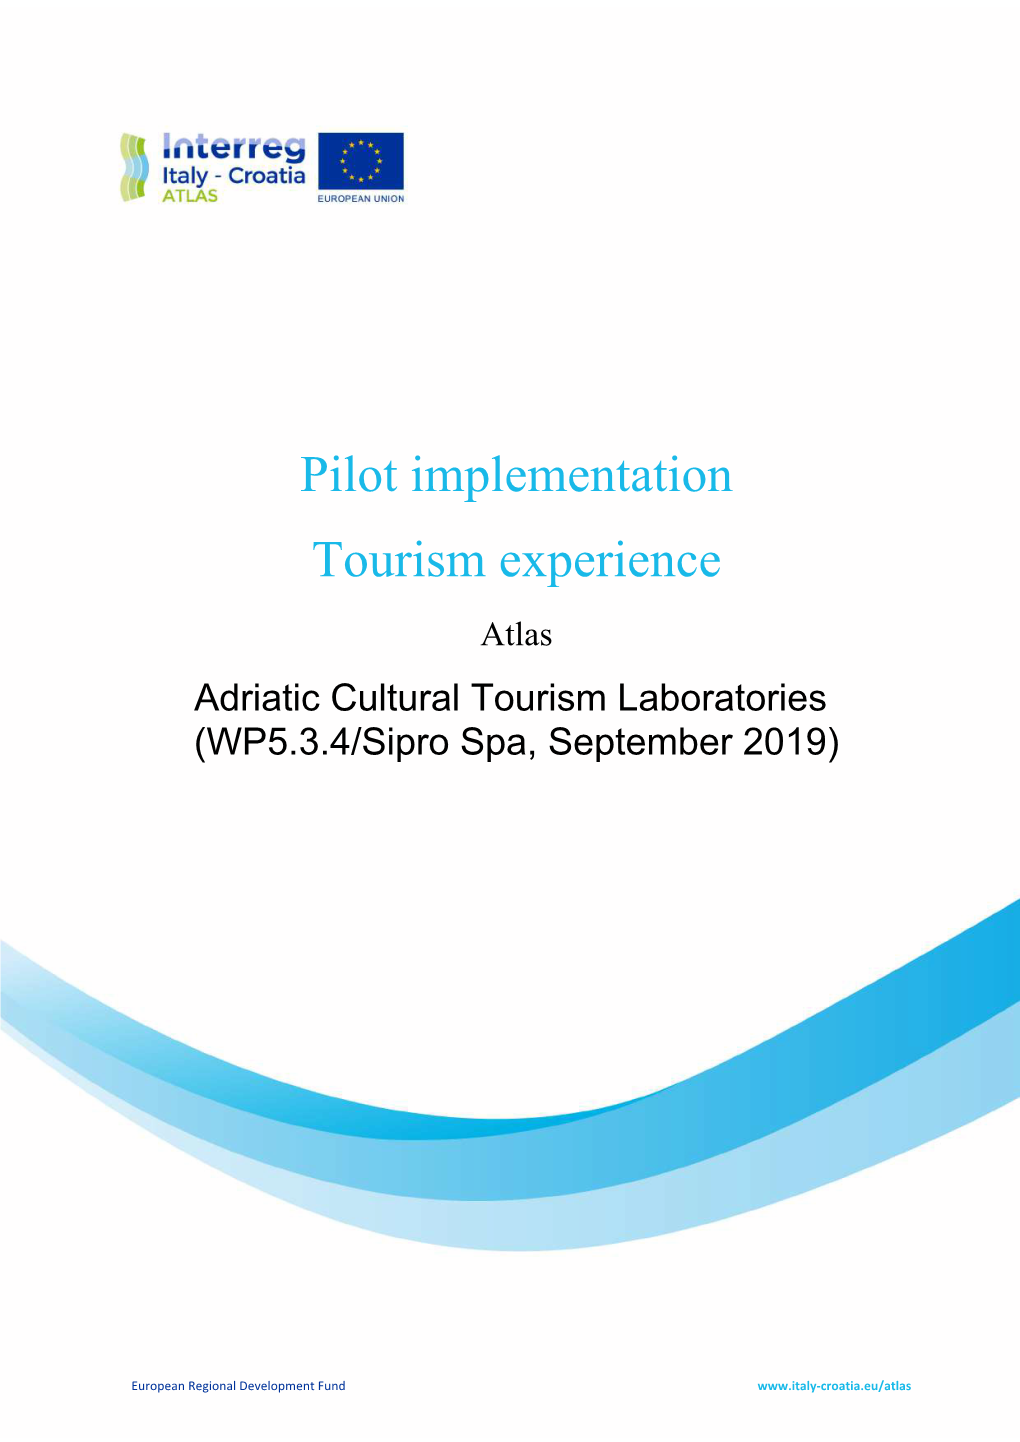 Pilot Implementation Tourism Experience Atlas Adriatic Cultural Tourism Laboratories (WP5.3.4/Sipro Spa, September 2019)